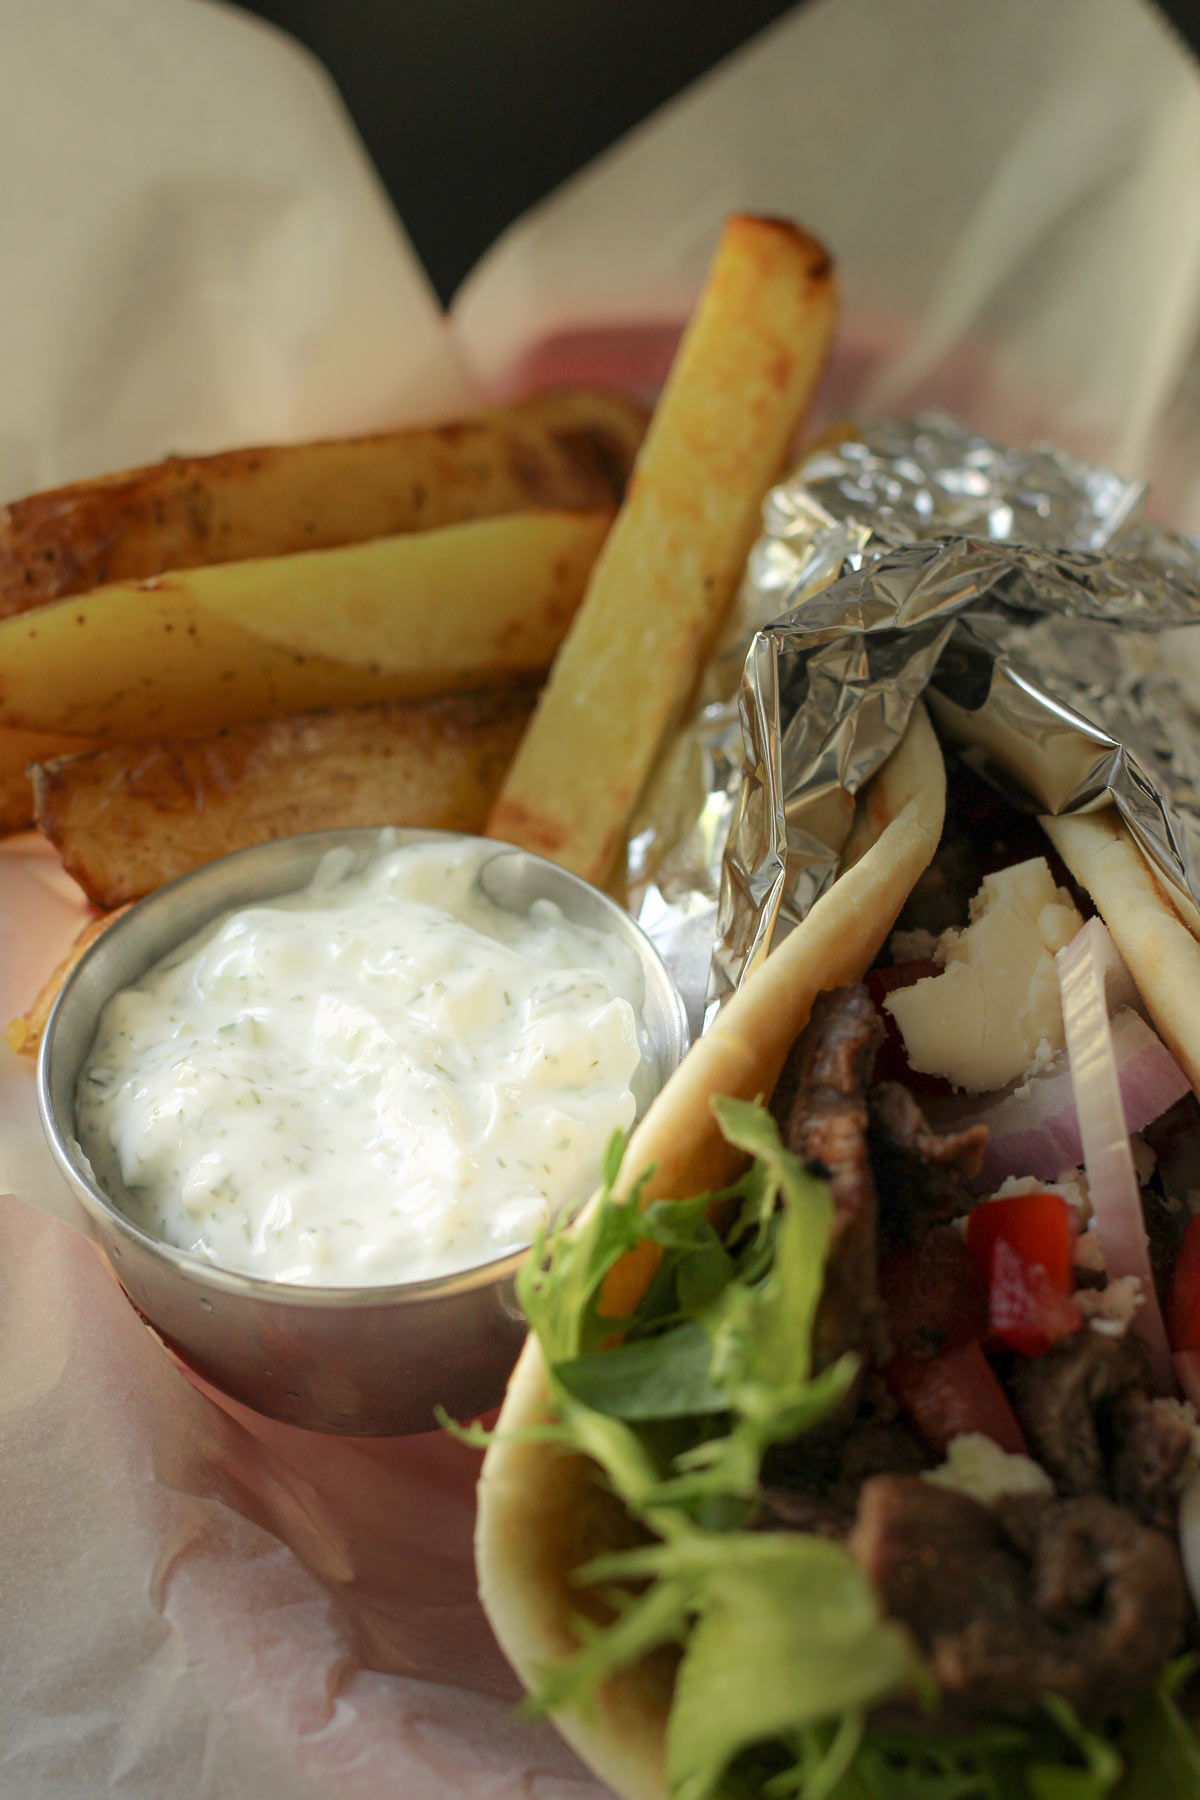 small dish of tzatziki garlic yogurt sauce next to a pita in a basket with fries.